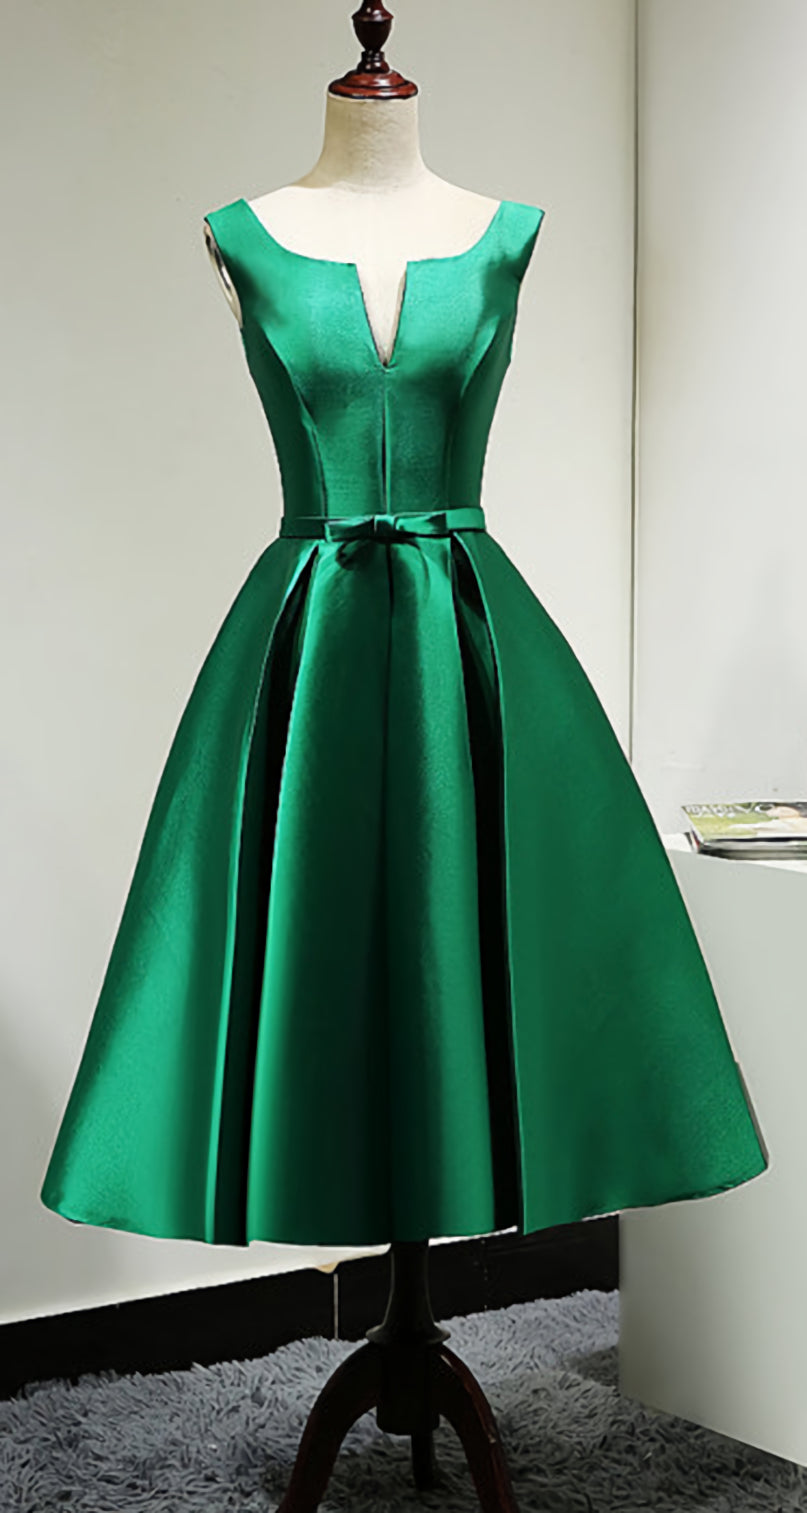 Simple Wedding Dress, Green Satin Tea Length Bridesmaid Dress, Lovely Green Homecoming Dress